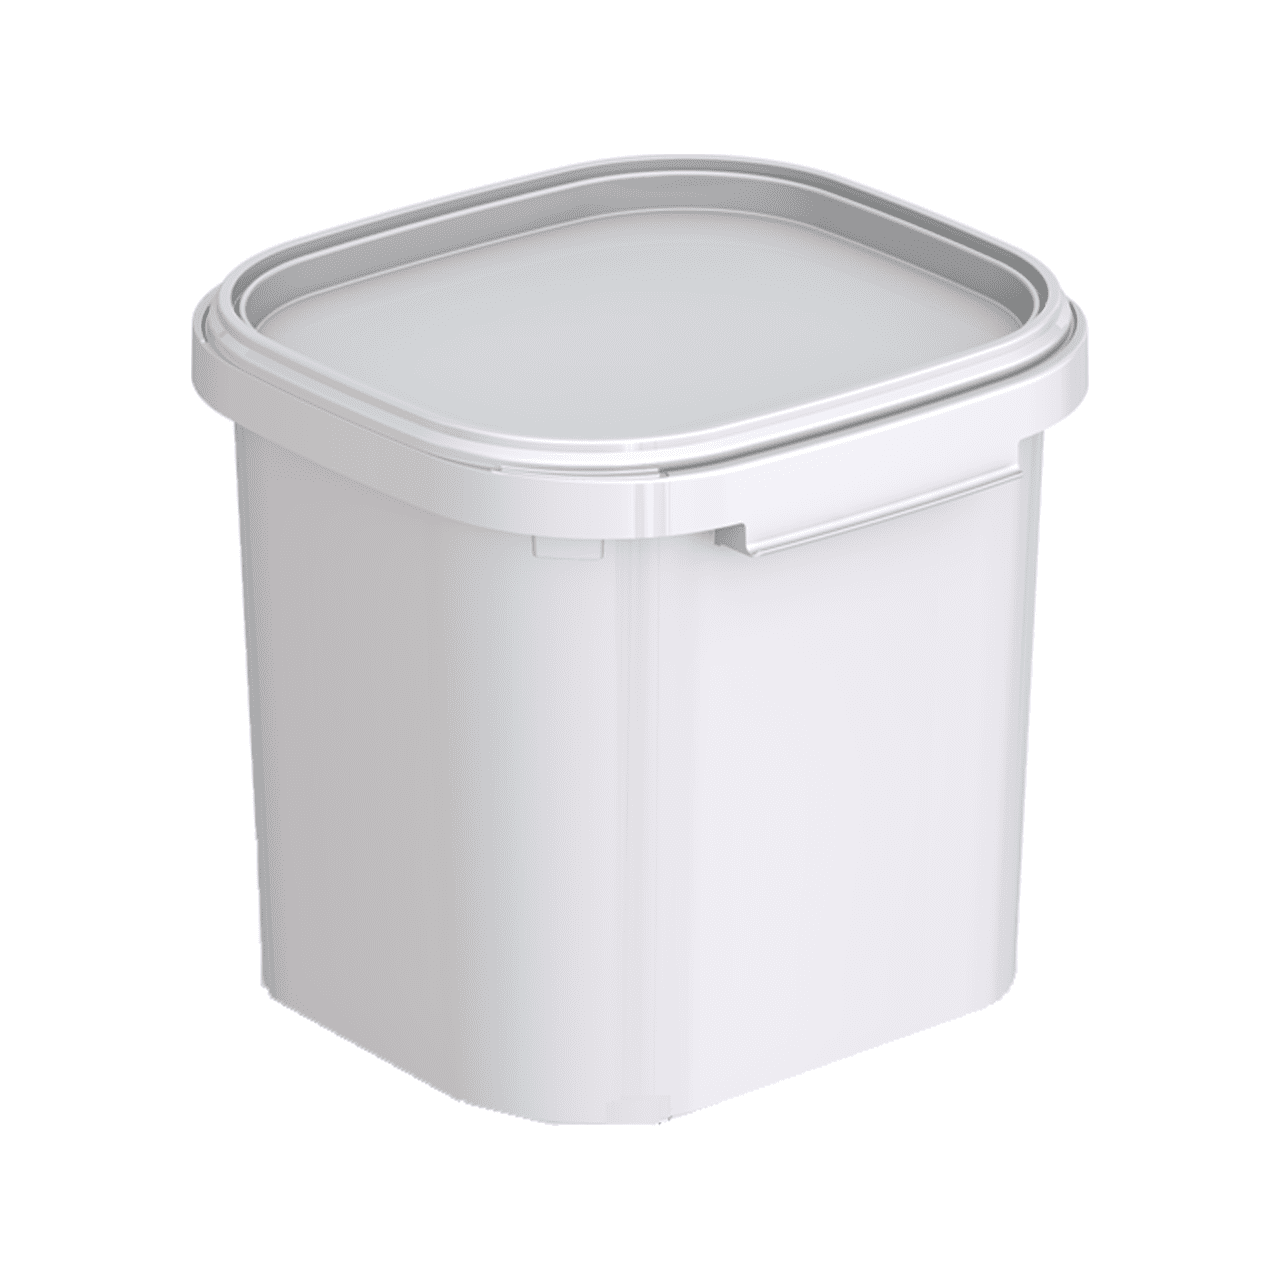 35.4 Litre Square Heavy Duty Airtight Plastic Catering Bucket